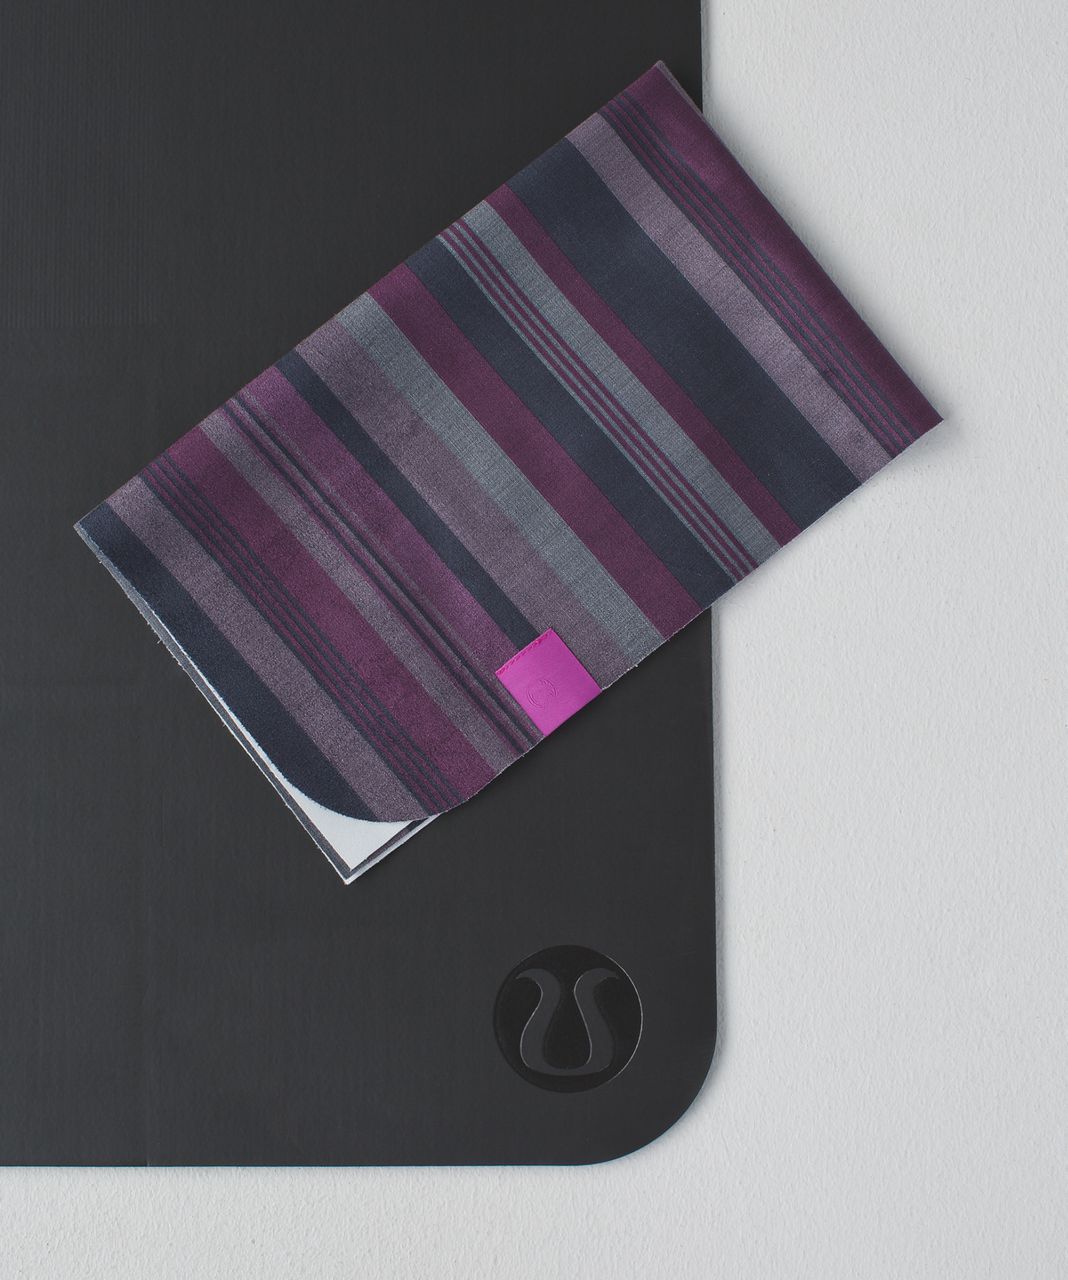 Lululemon The (Small) Towel - Giant Blanket Stripe Printed Regal Plum Mellow Magenta